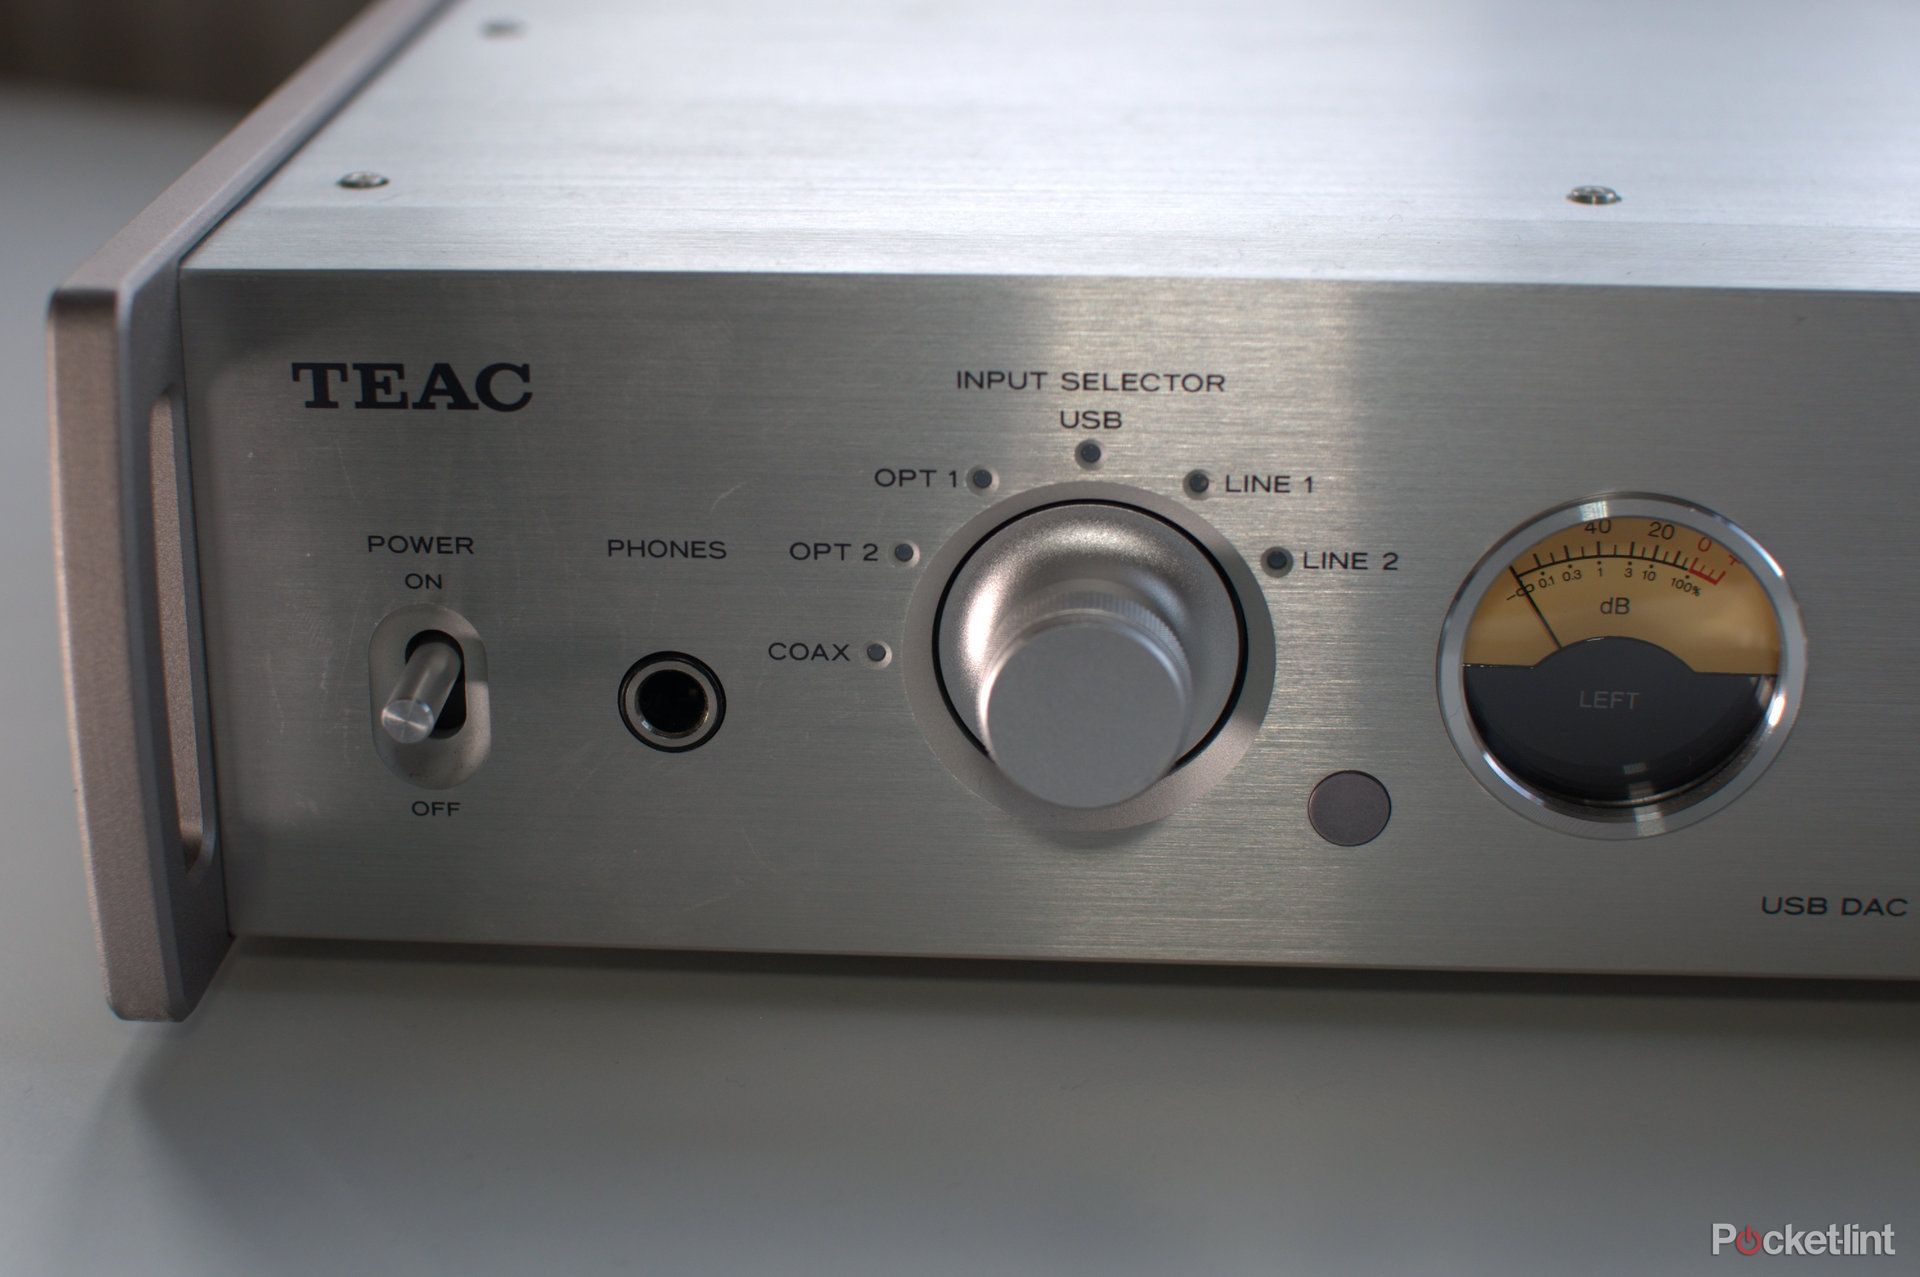 teac usb dac amplifier ai 501da review image 5